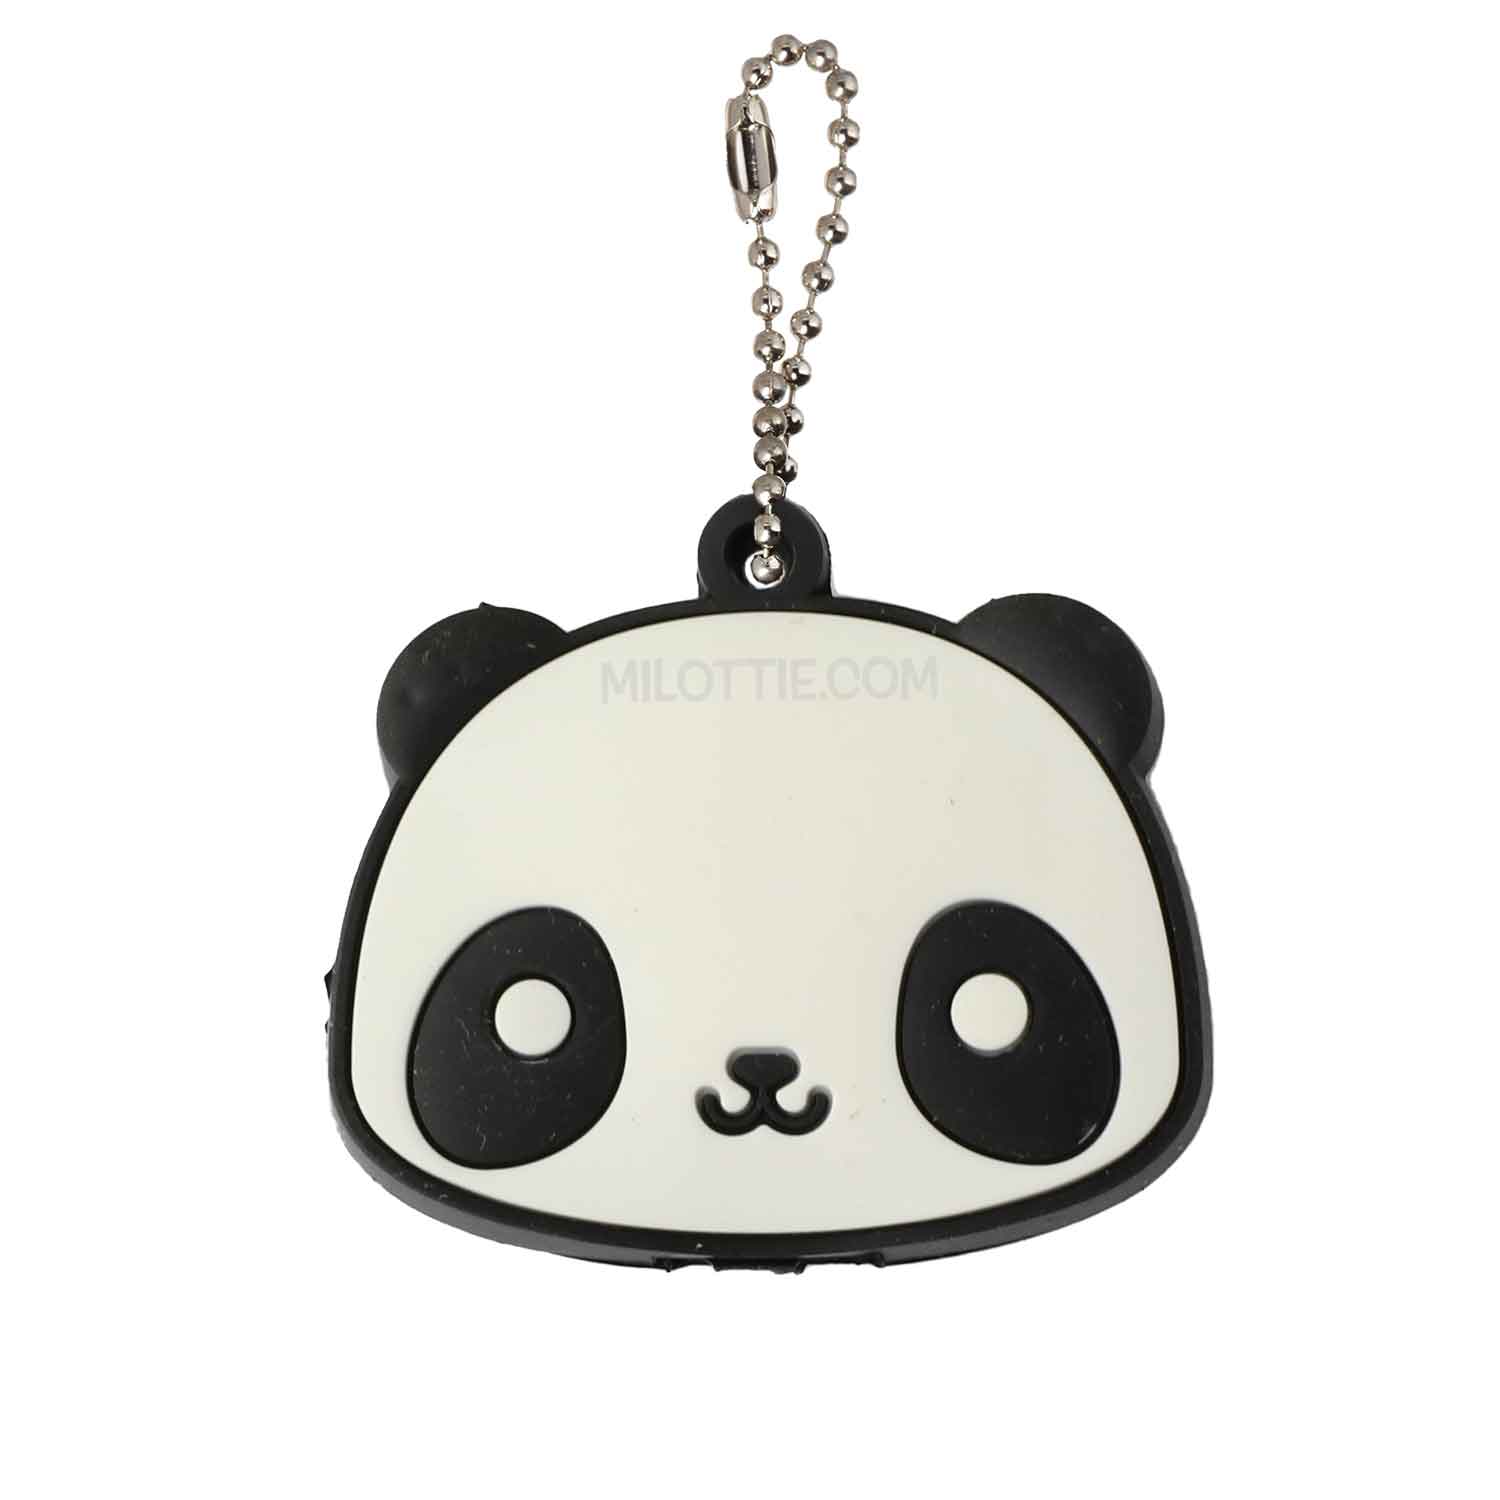 panda key cover - Milottie